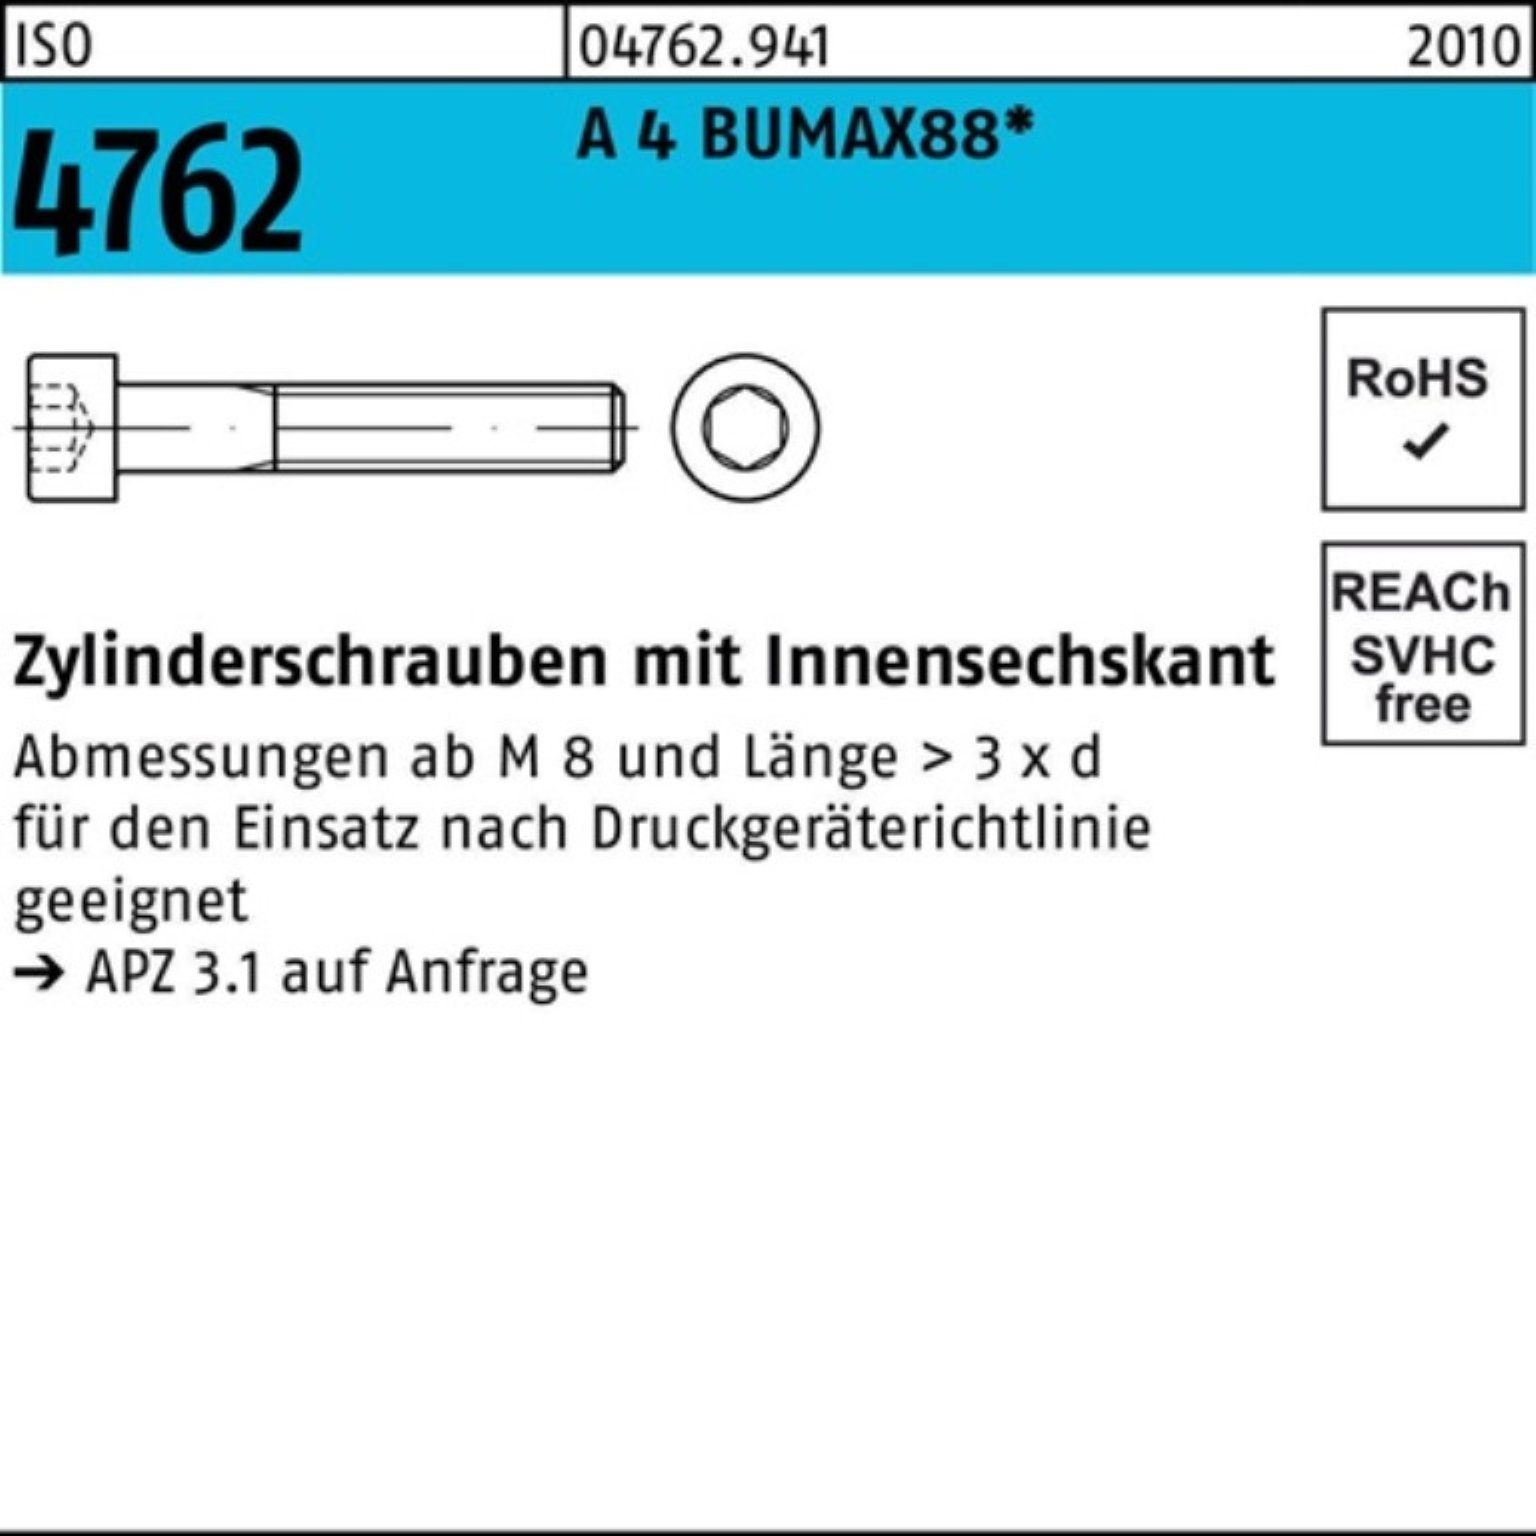 Bufab M6x 4 100 Innen-6kt Zylinderschraube ISO BUMAX88 100er 70 A Pack 4762 Zylinderschraube